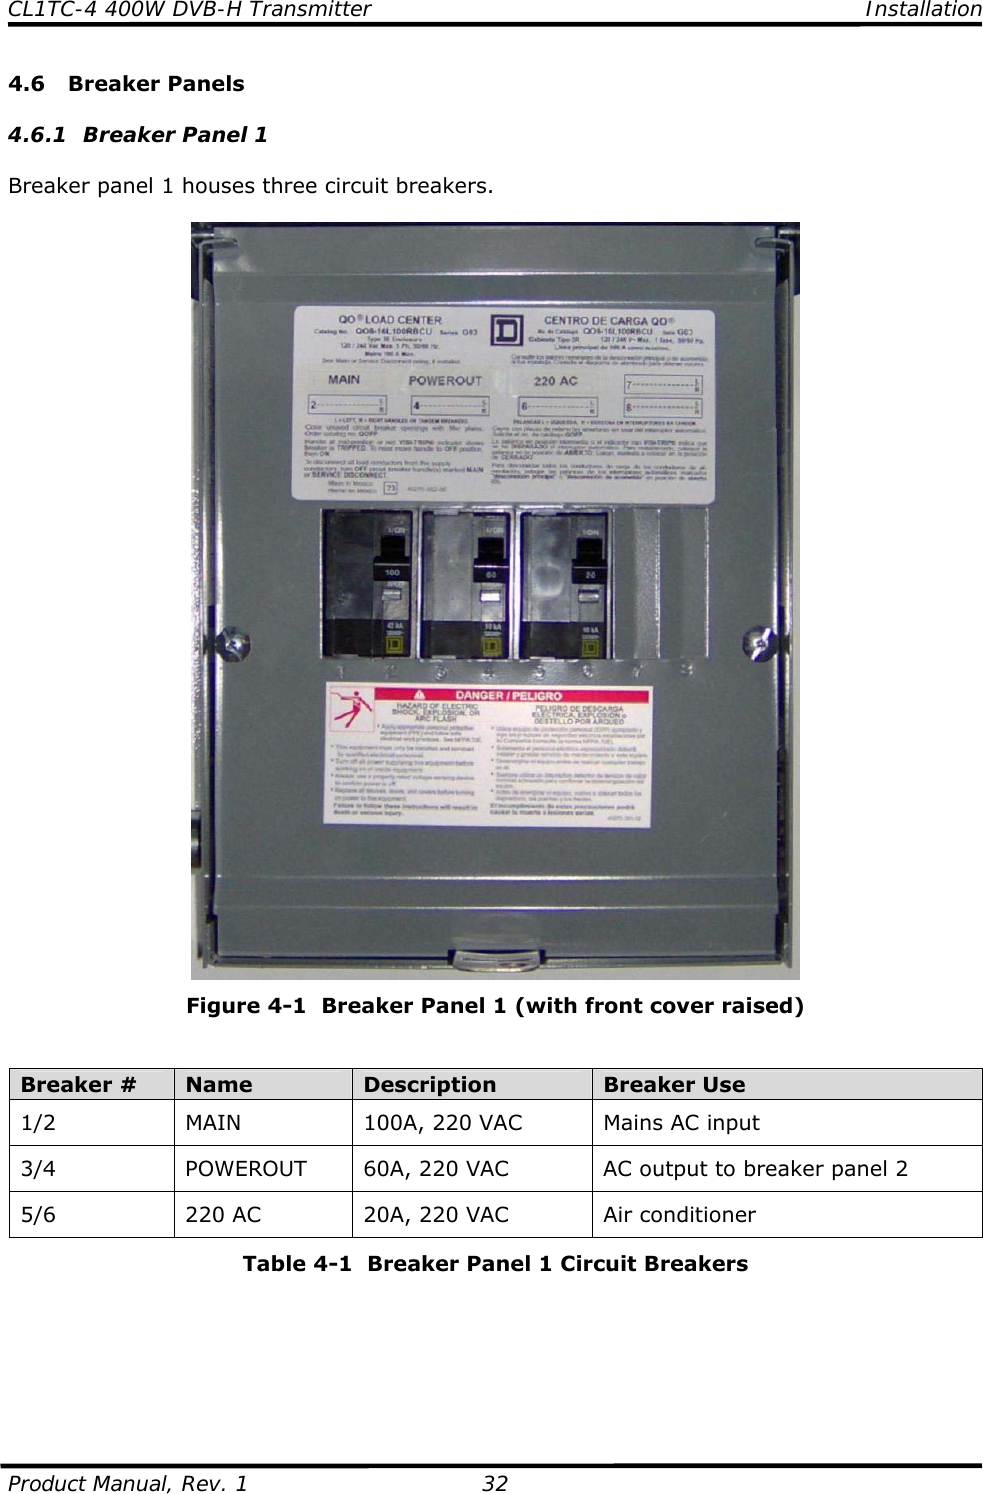 CL1TC-4 400W DVB-H Transmitter    Installation  Product Manual, Rev. 1  32 4.6 Breaker Panels  4.6.1 Breaker Panel 1  Breaker panel 1 houses three circuit breakers.   Figure 4-1  Breaker Panel 1 (with front cover raised)   Breaker #  Name  Description  Breaker Use 1/2  MAIN  100A, 220 VAC  Mains AC input 3/4  POWEROUT  60A, 220 VAC  AC output to breaker panel 2 5/6  220 AC  20A, 220 VAC  Air conditioner Table 4-1  Breaker Panel 1 Circuit Breakers       